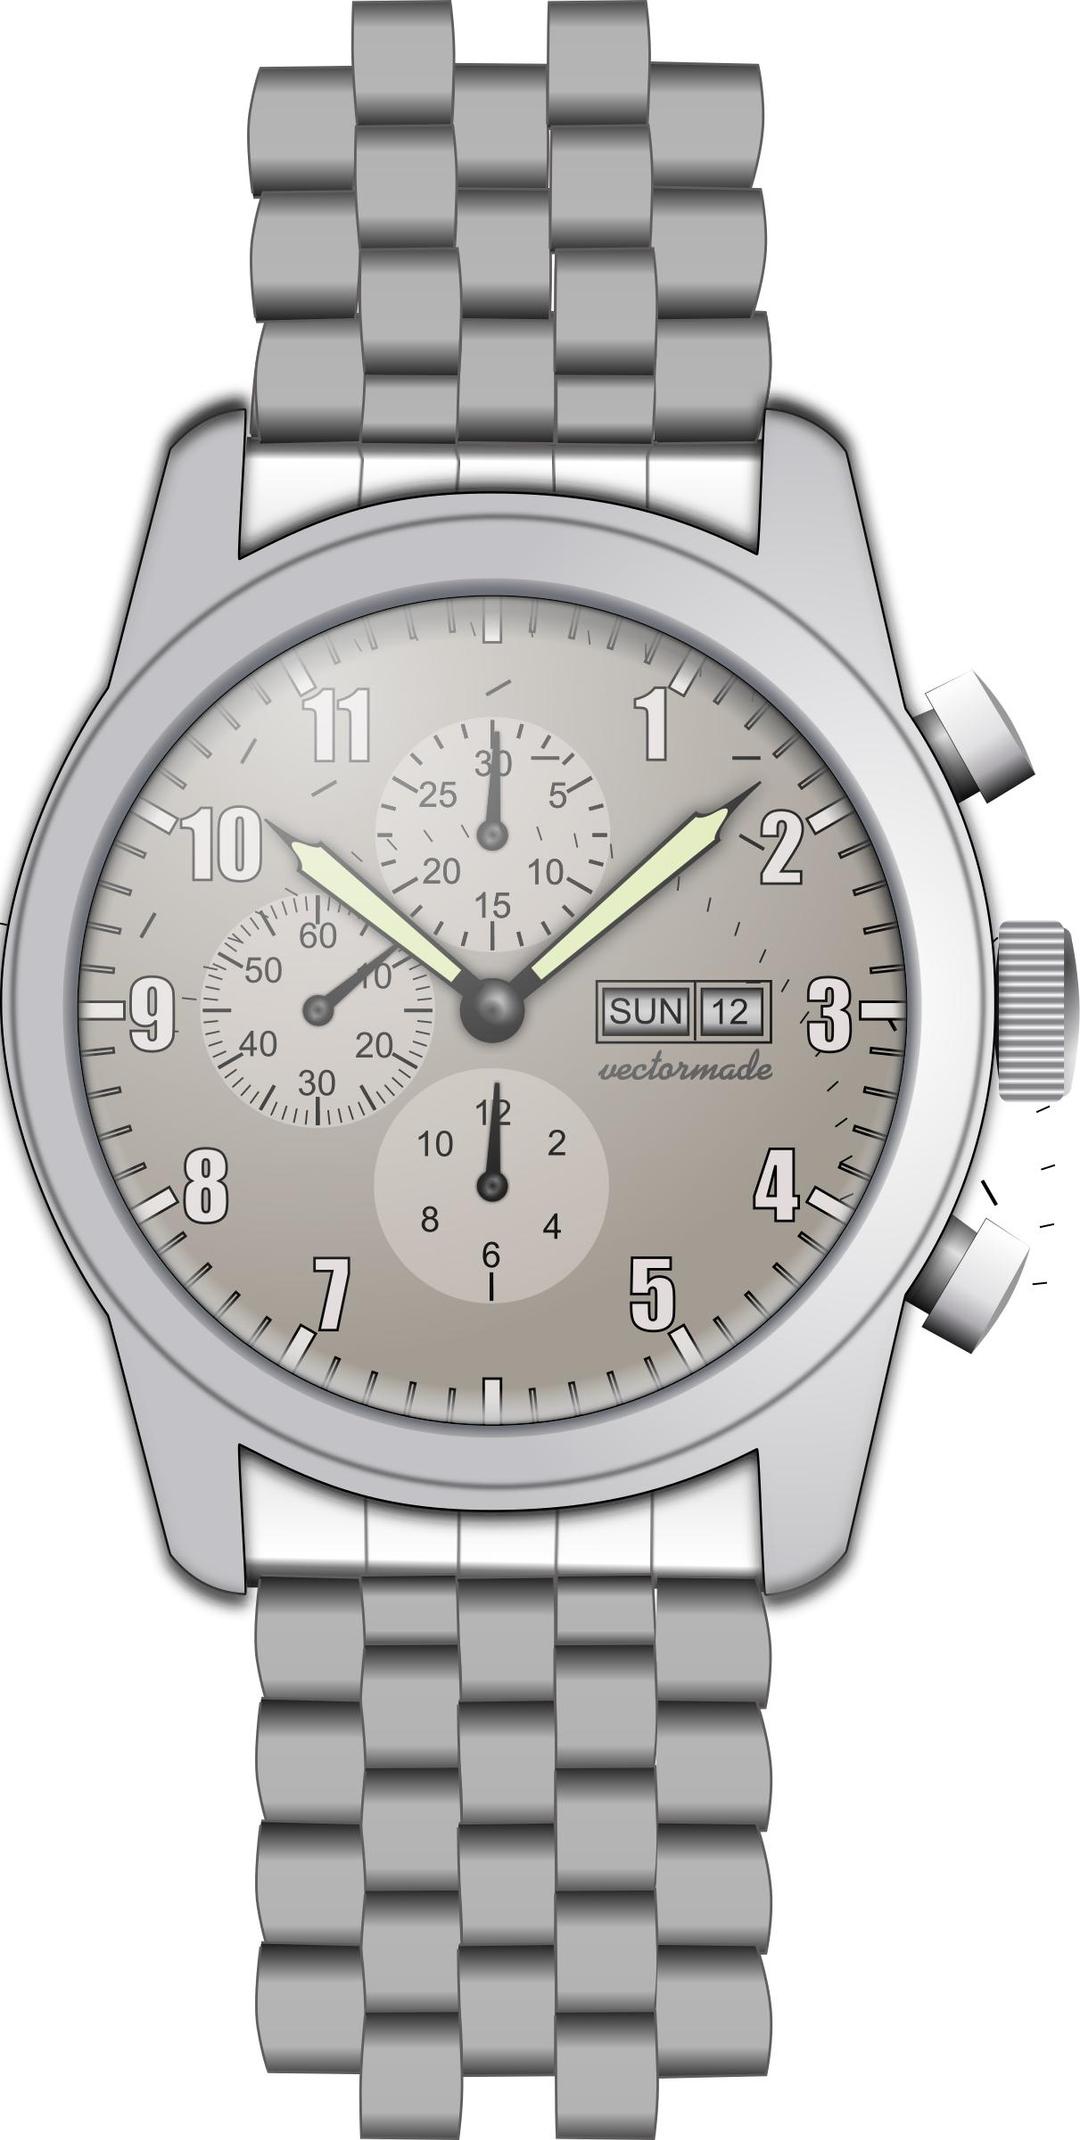 wristwatch #1 - chronometer png transparent